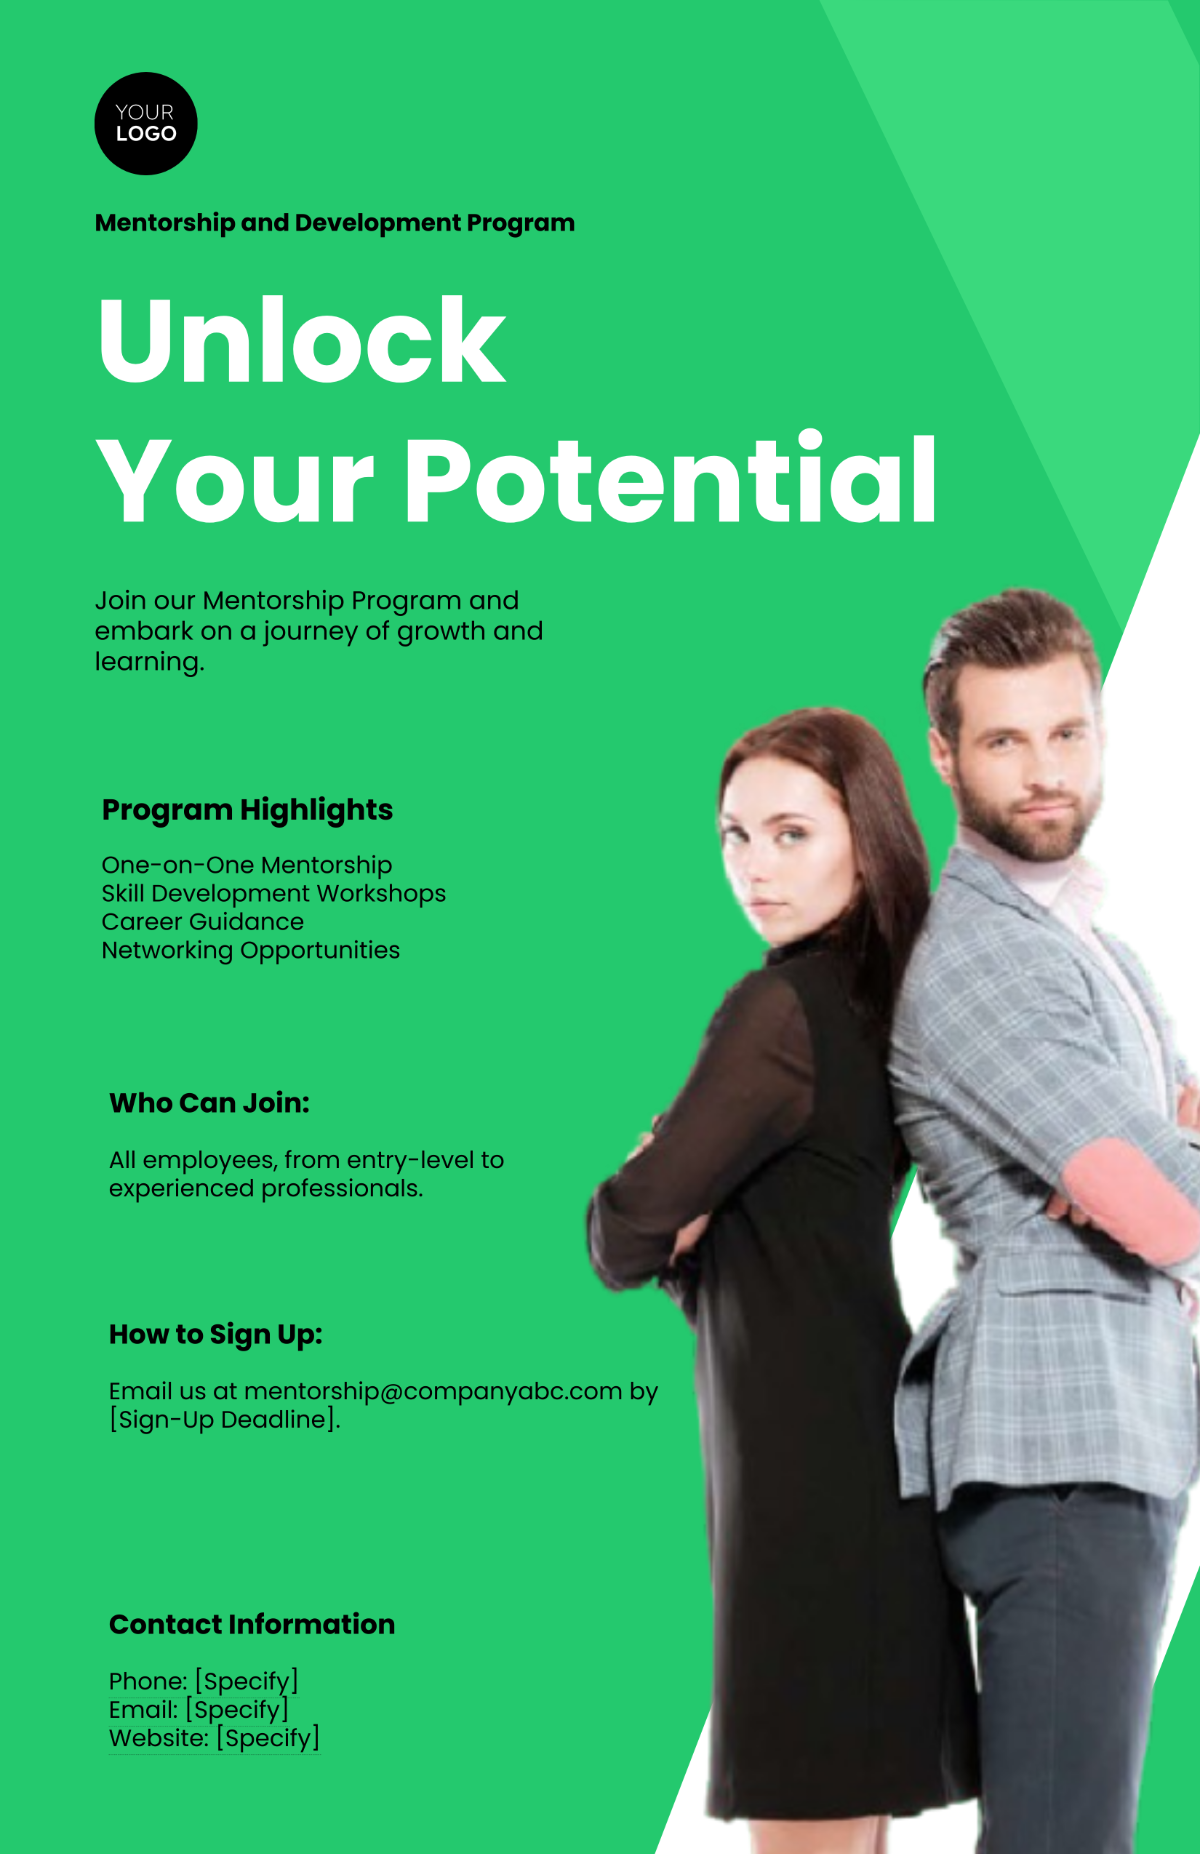 Mentorship and Development Program Poster HR Template